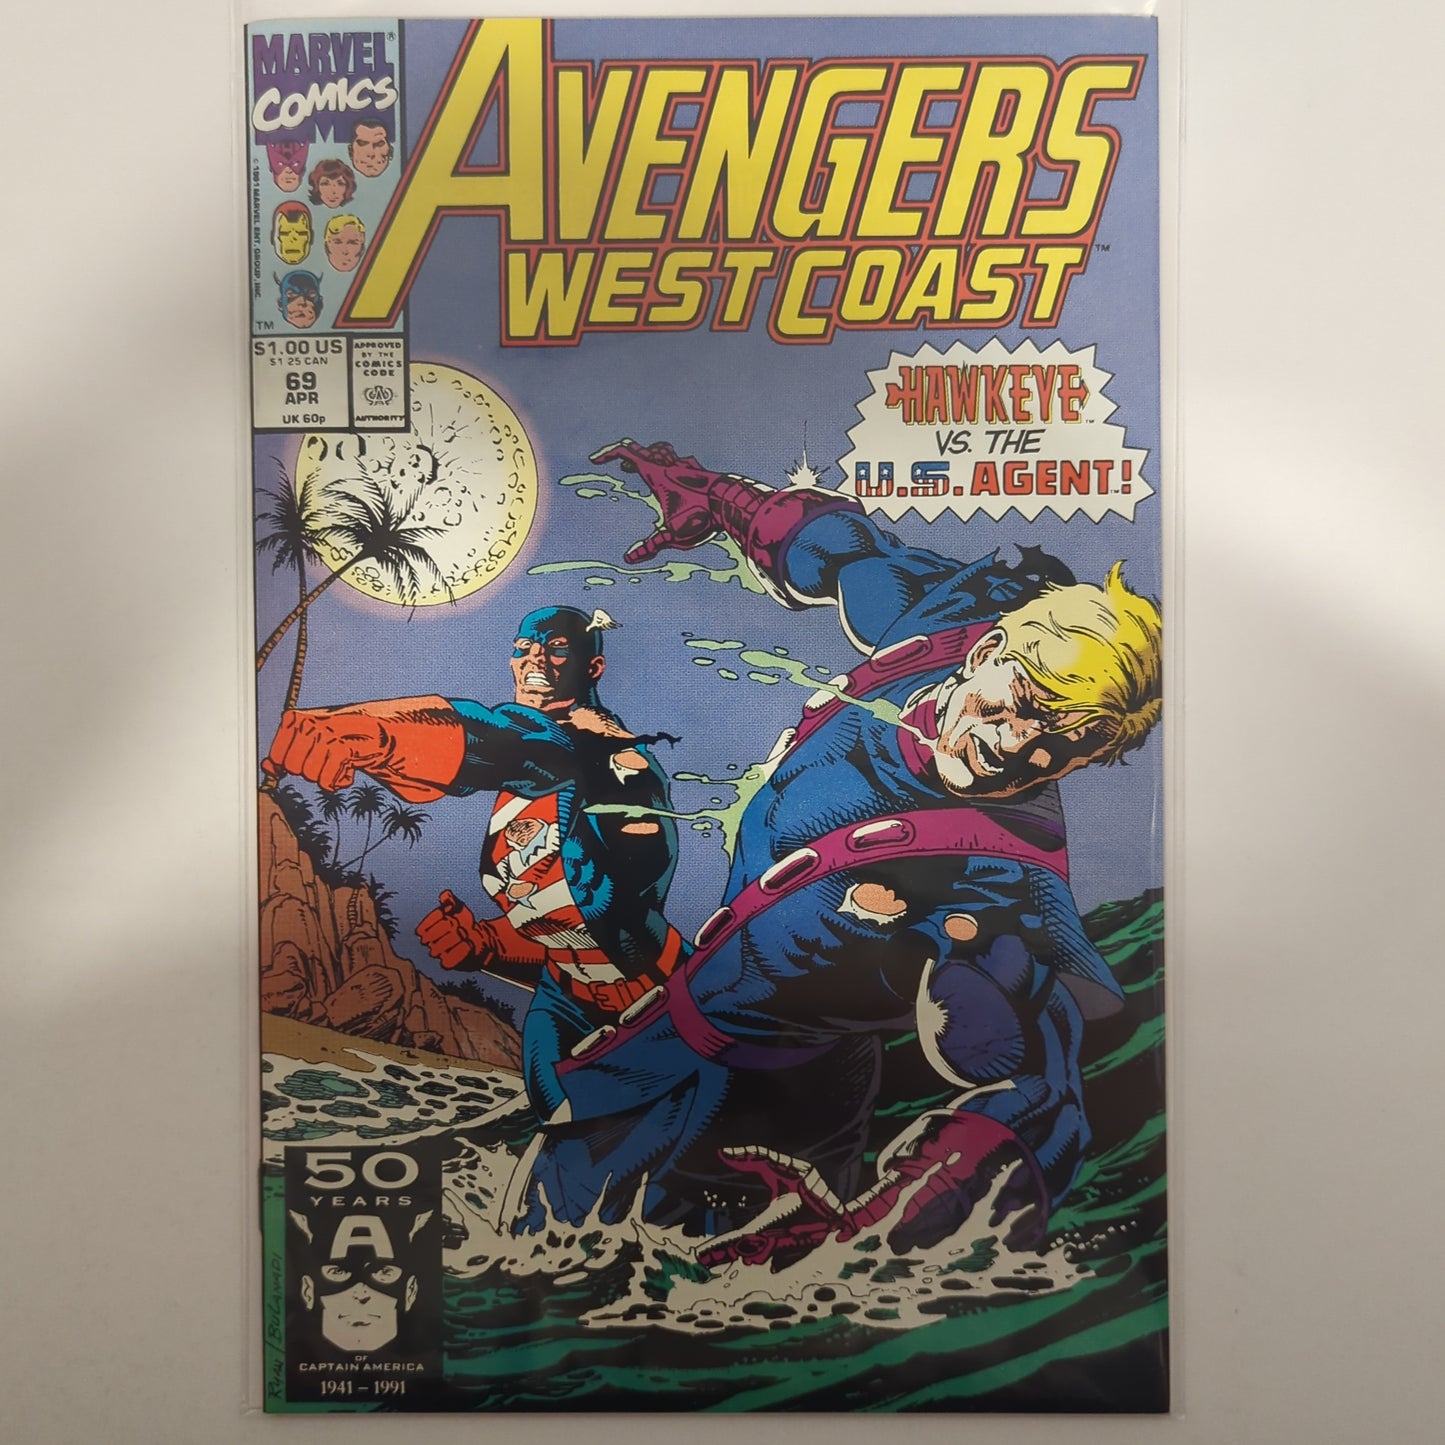 The West Coast Avengers #69